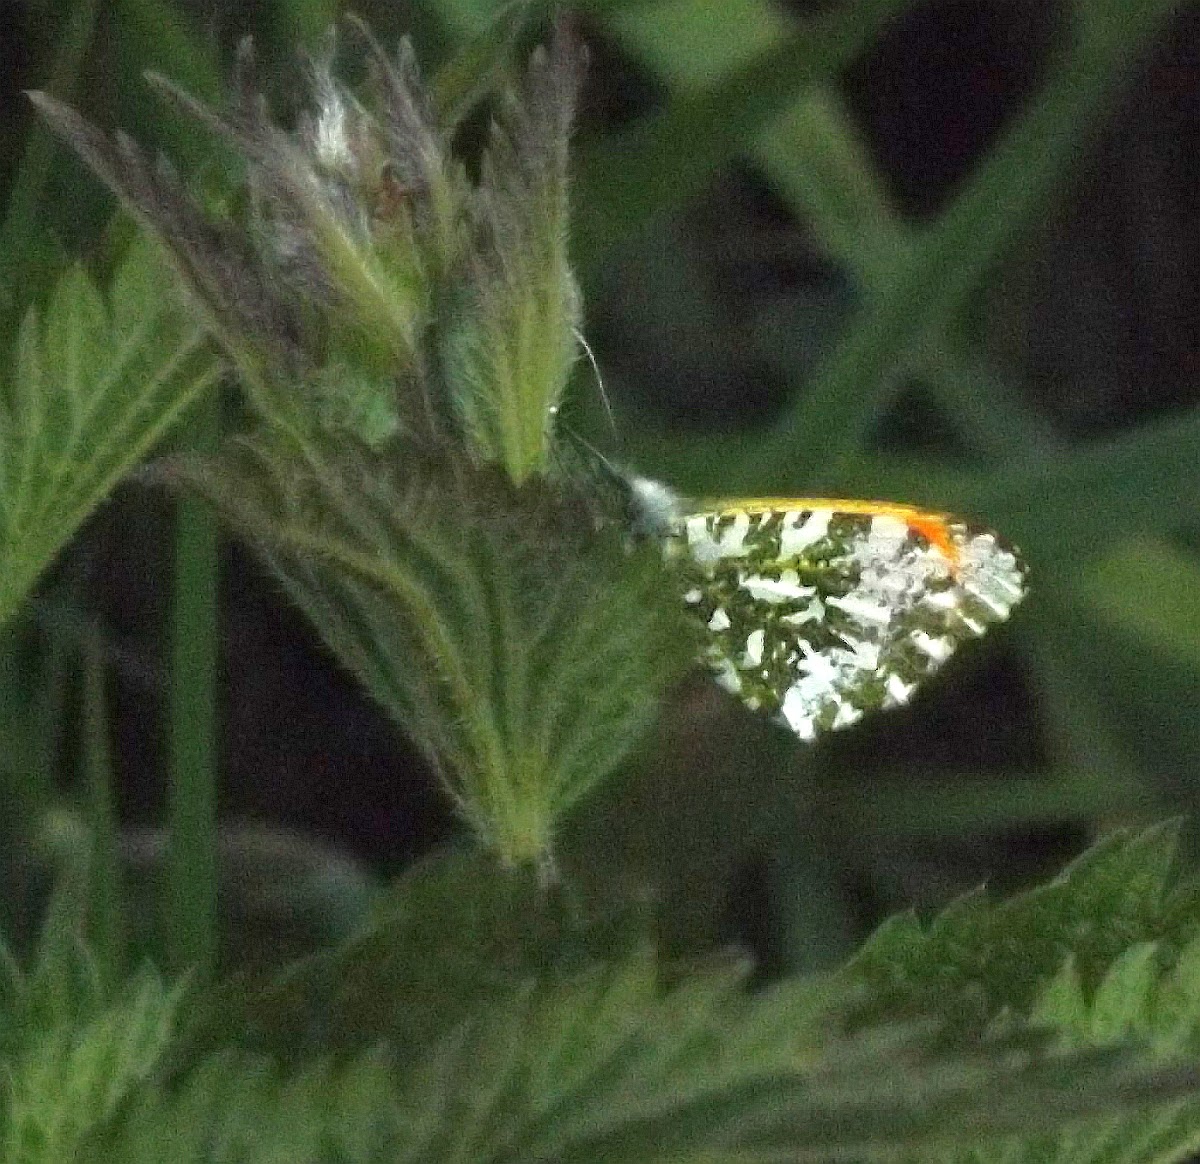 Orange tip Butterfly-closed wings